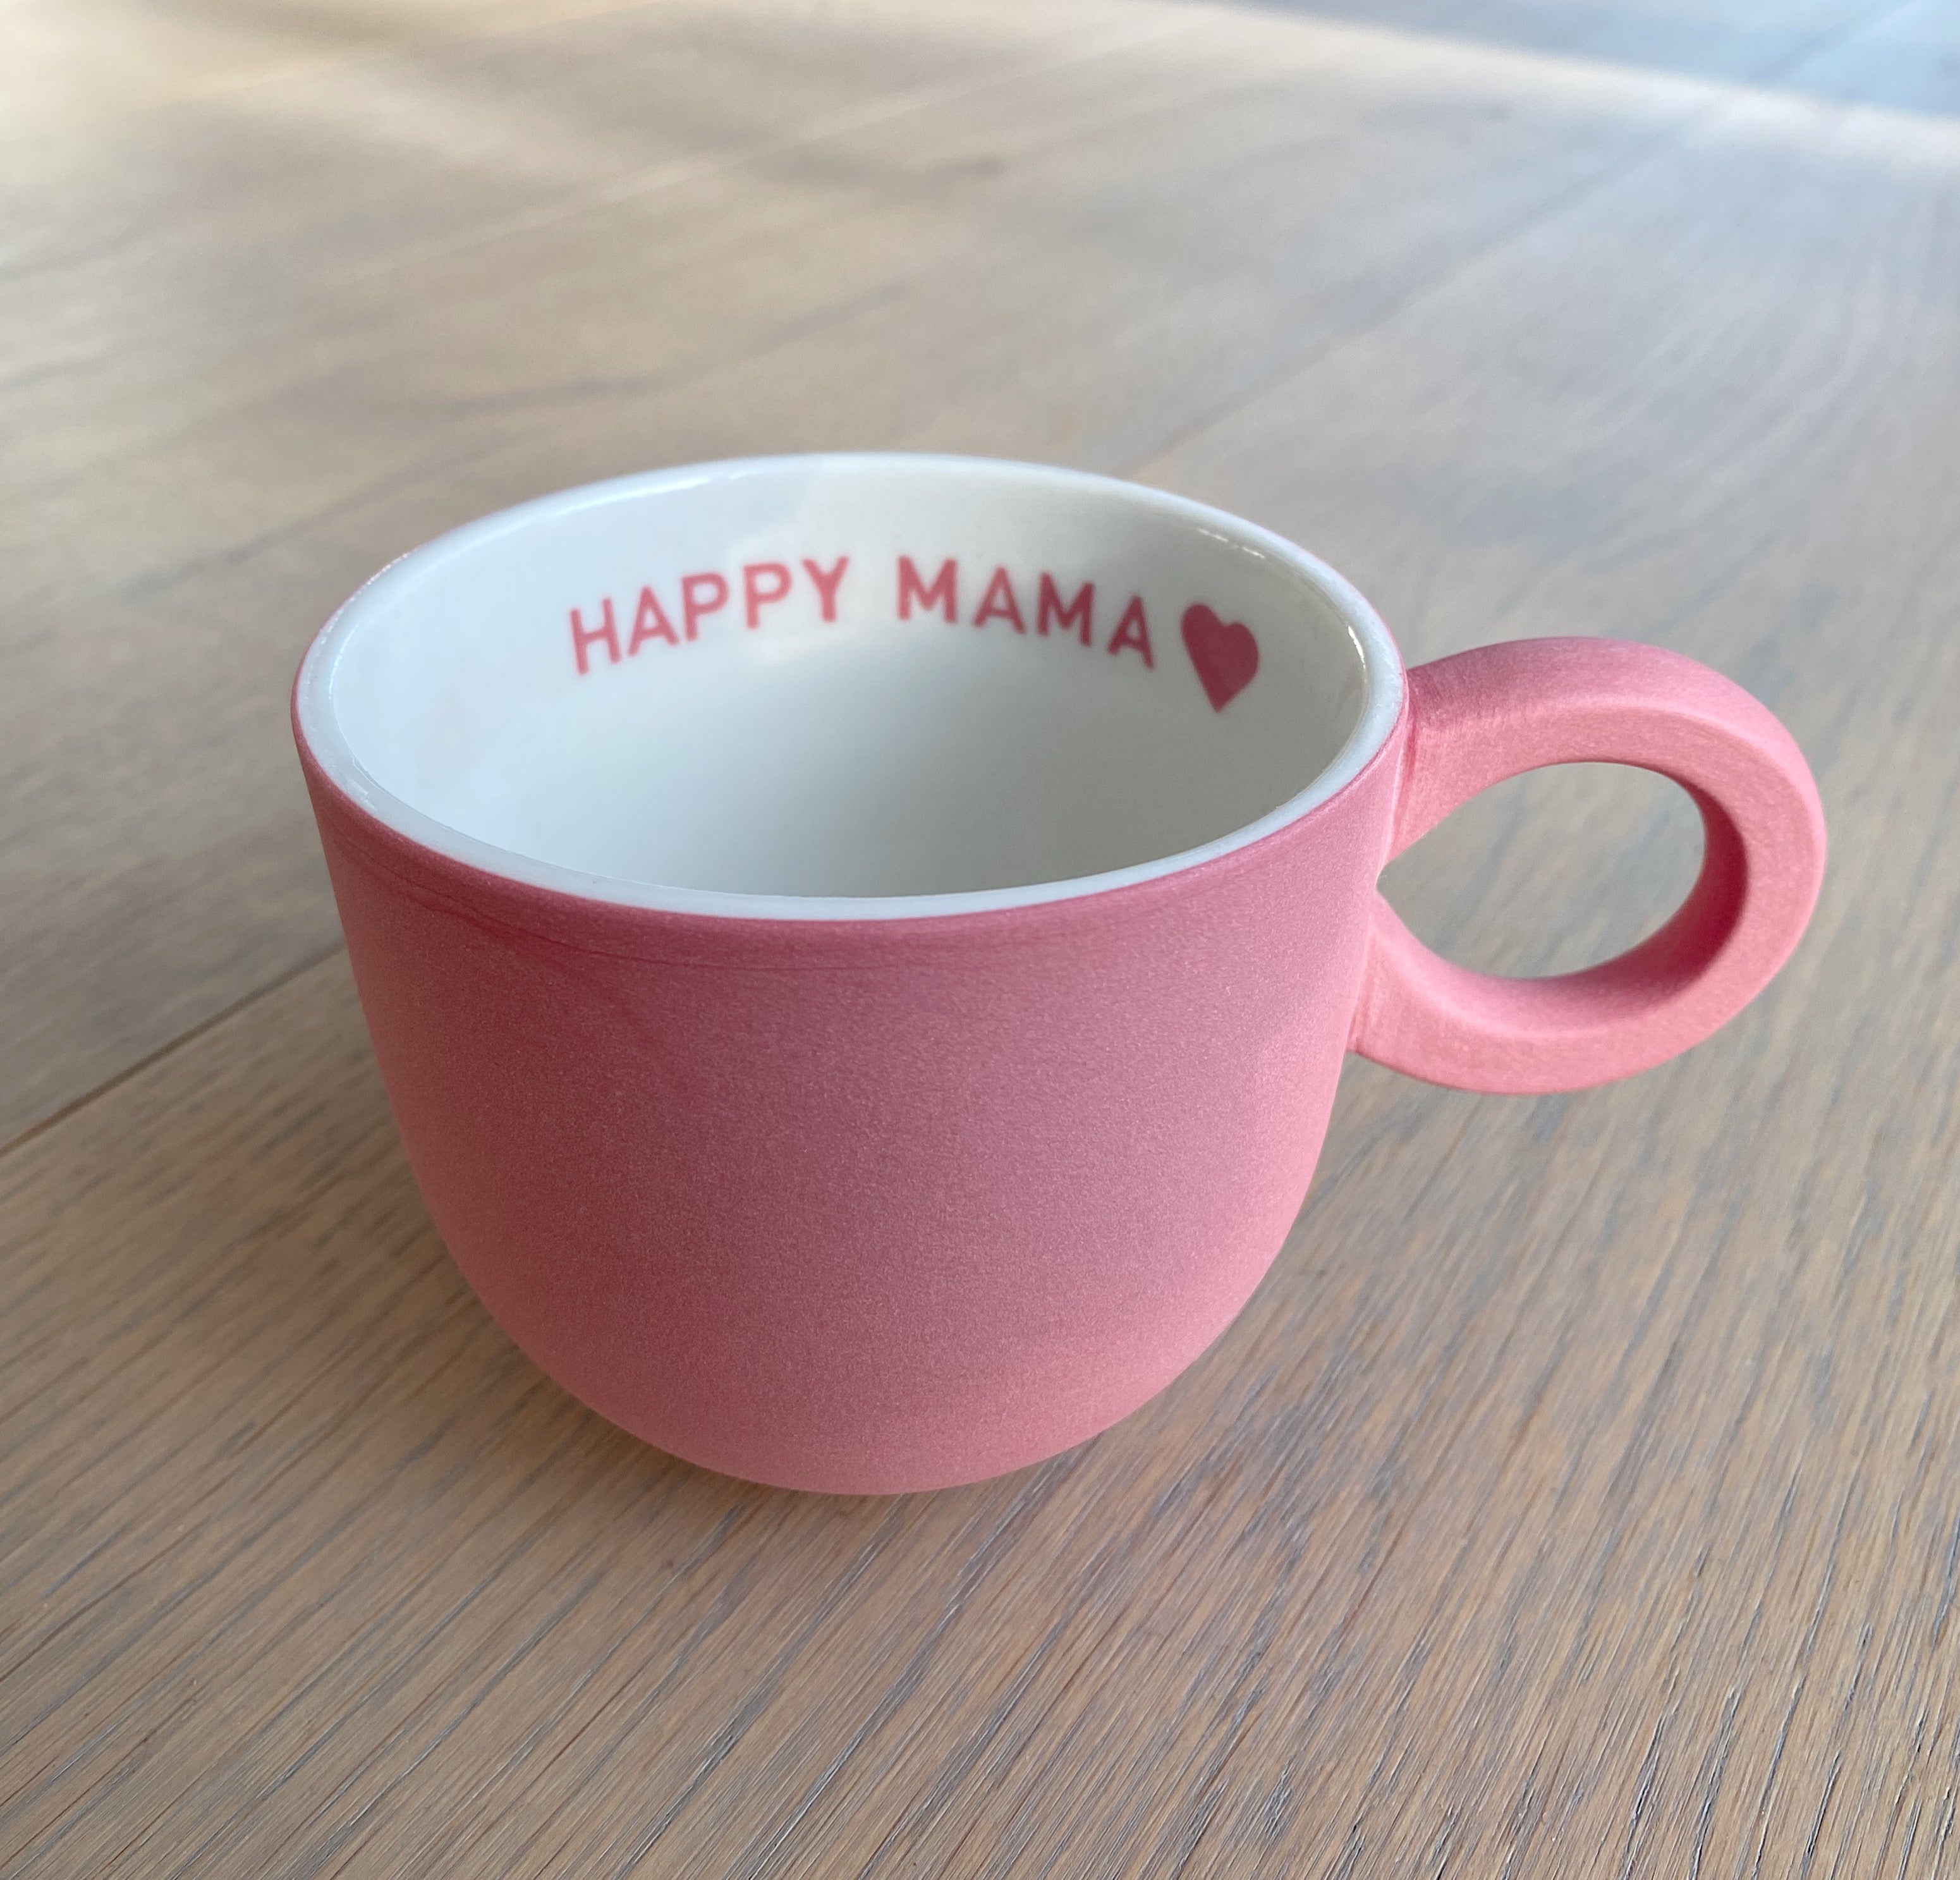 Helle Gram kop Chubby - hindbær og med tekst: Happy Mama